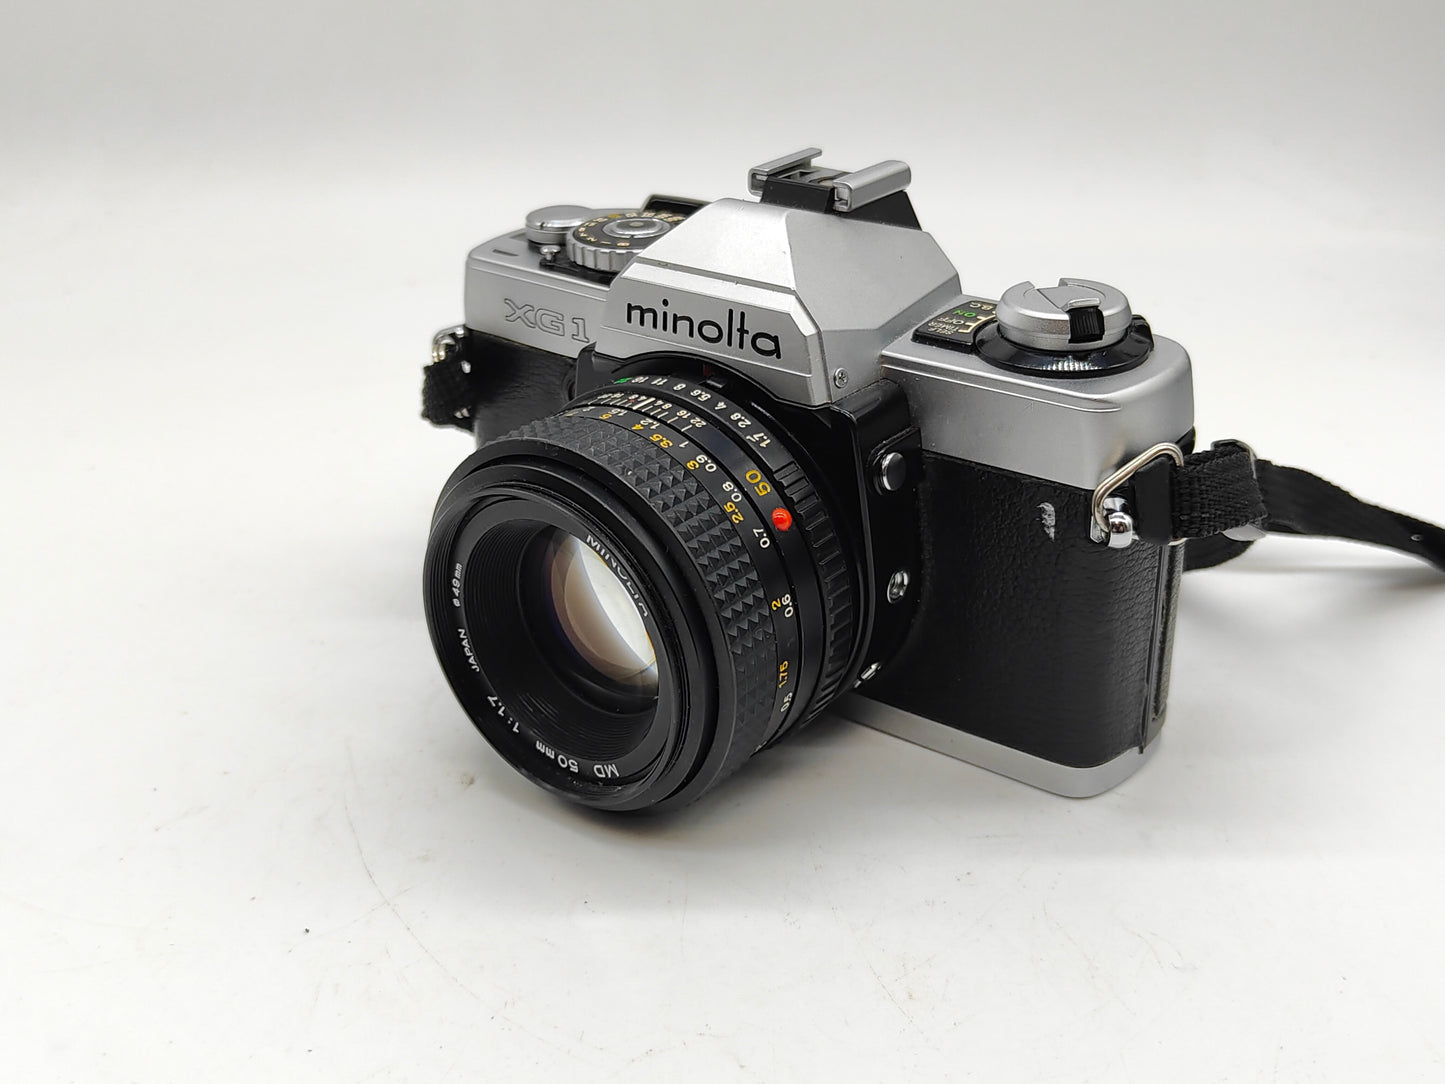 Minolta XG-1 SLR with 50mm f/1.7 lens